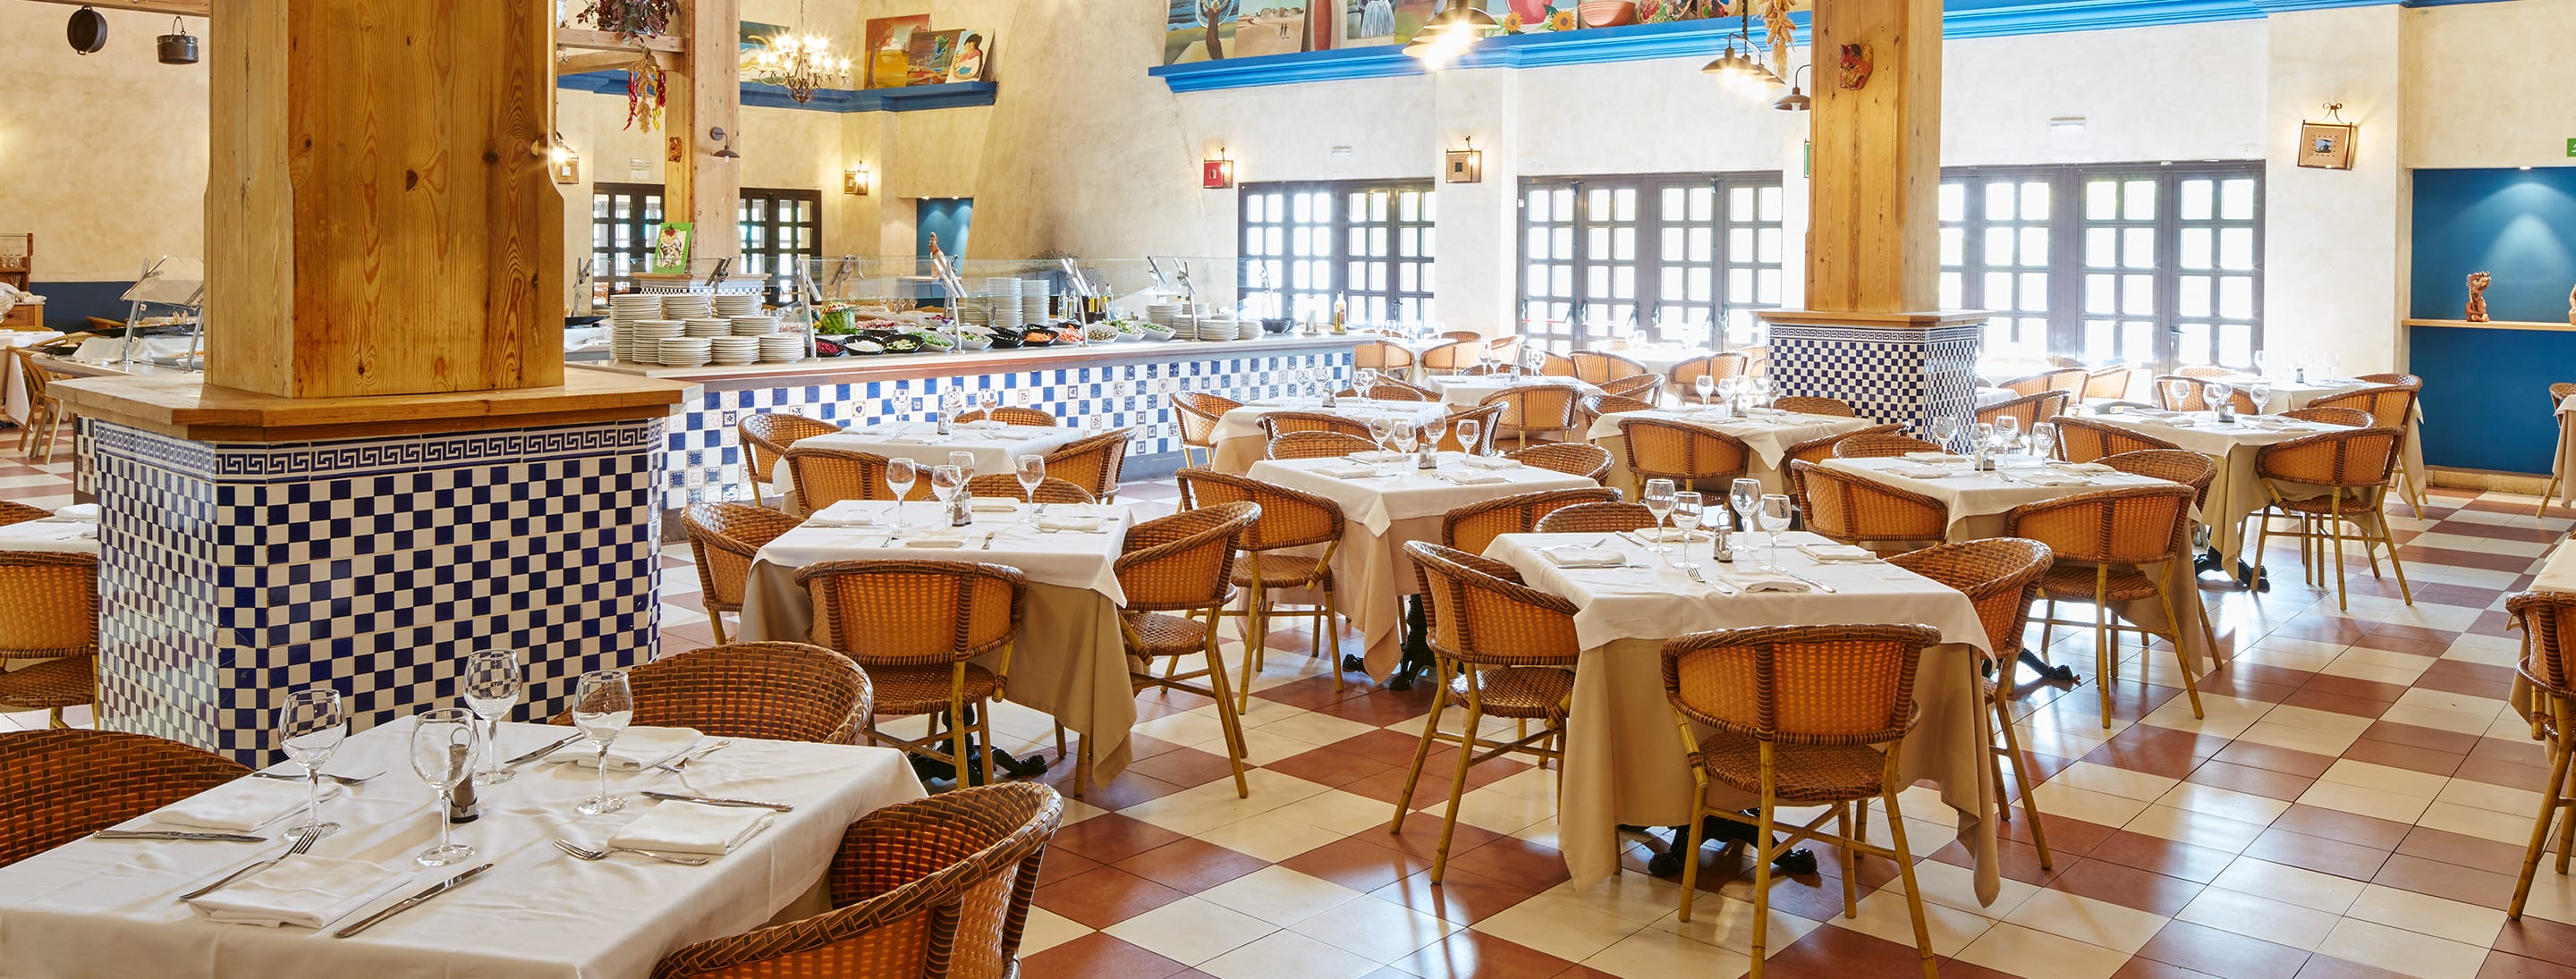 Merida - Restaurantes PortAventura World